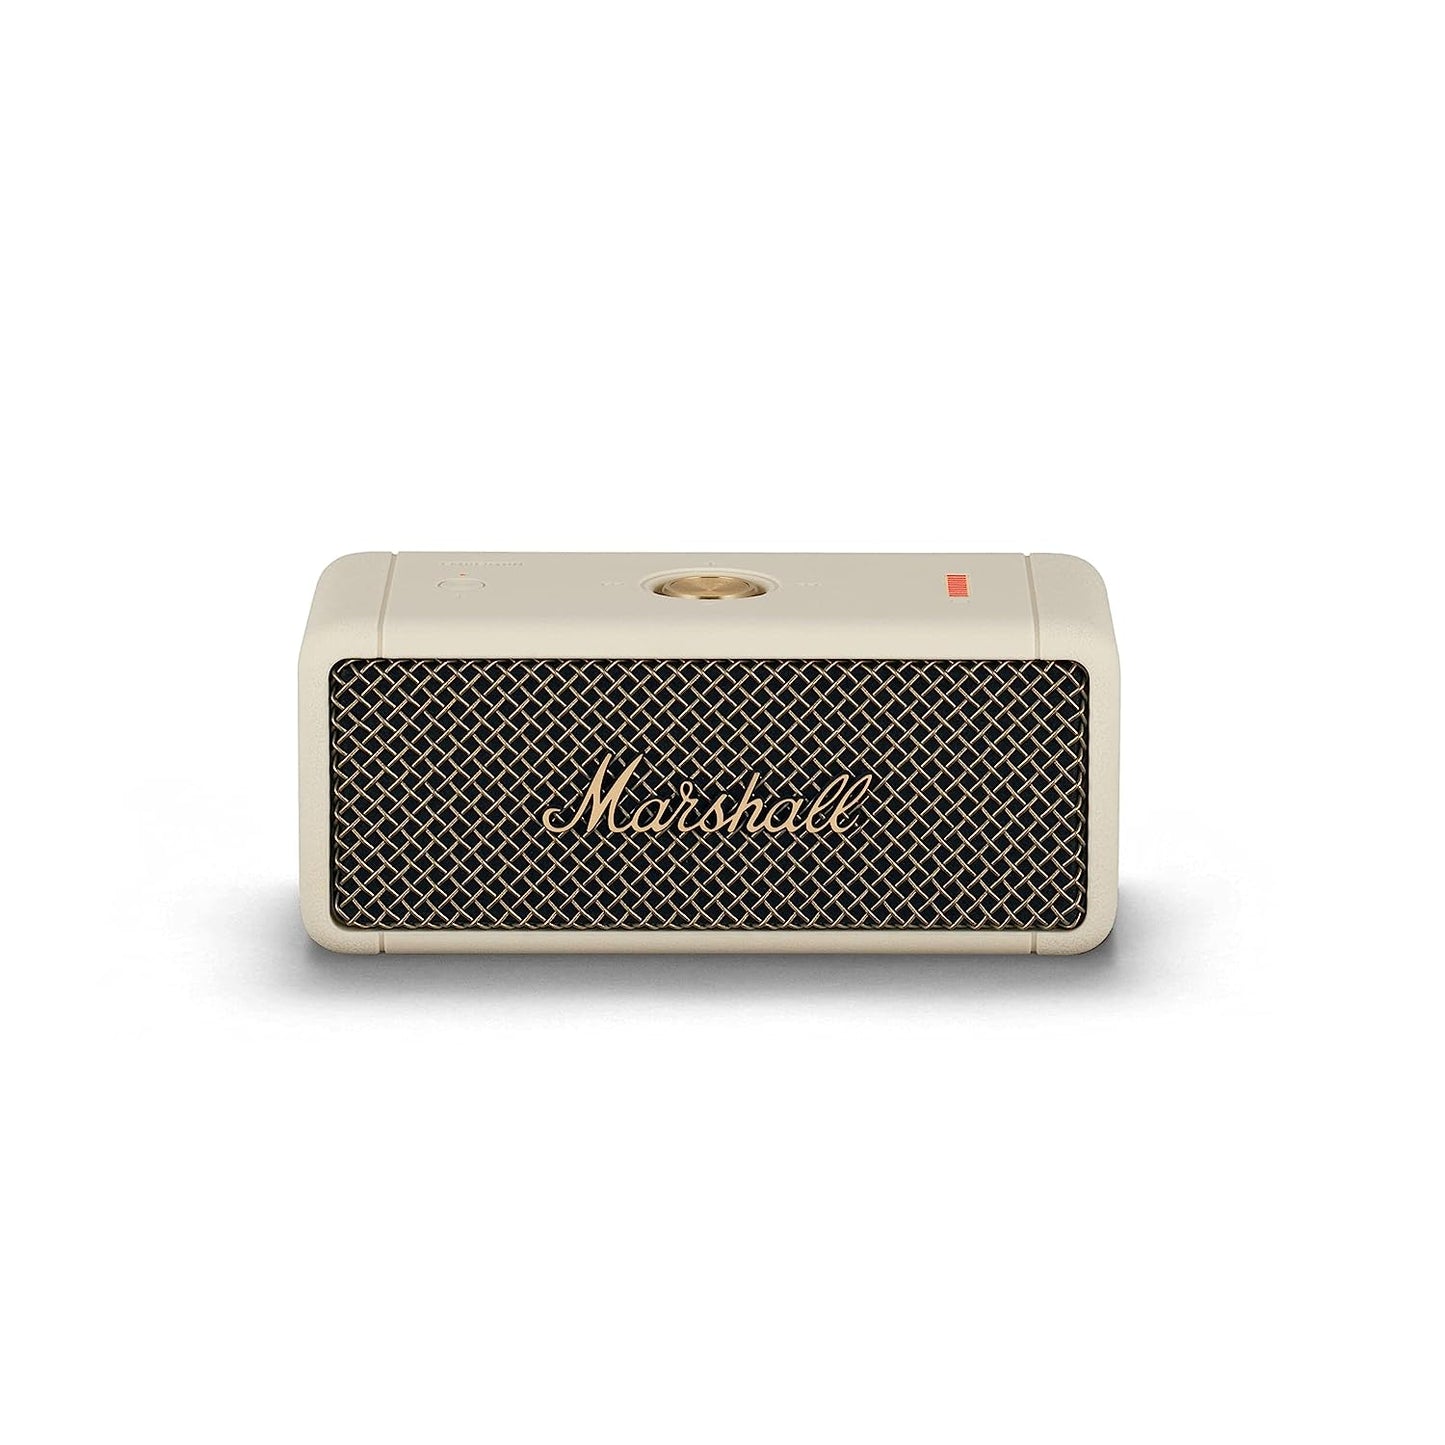 Marshall Emberton Bluetooth Speaker - Cream